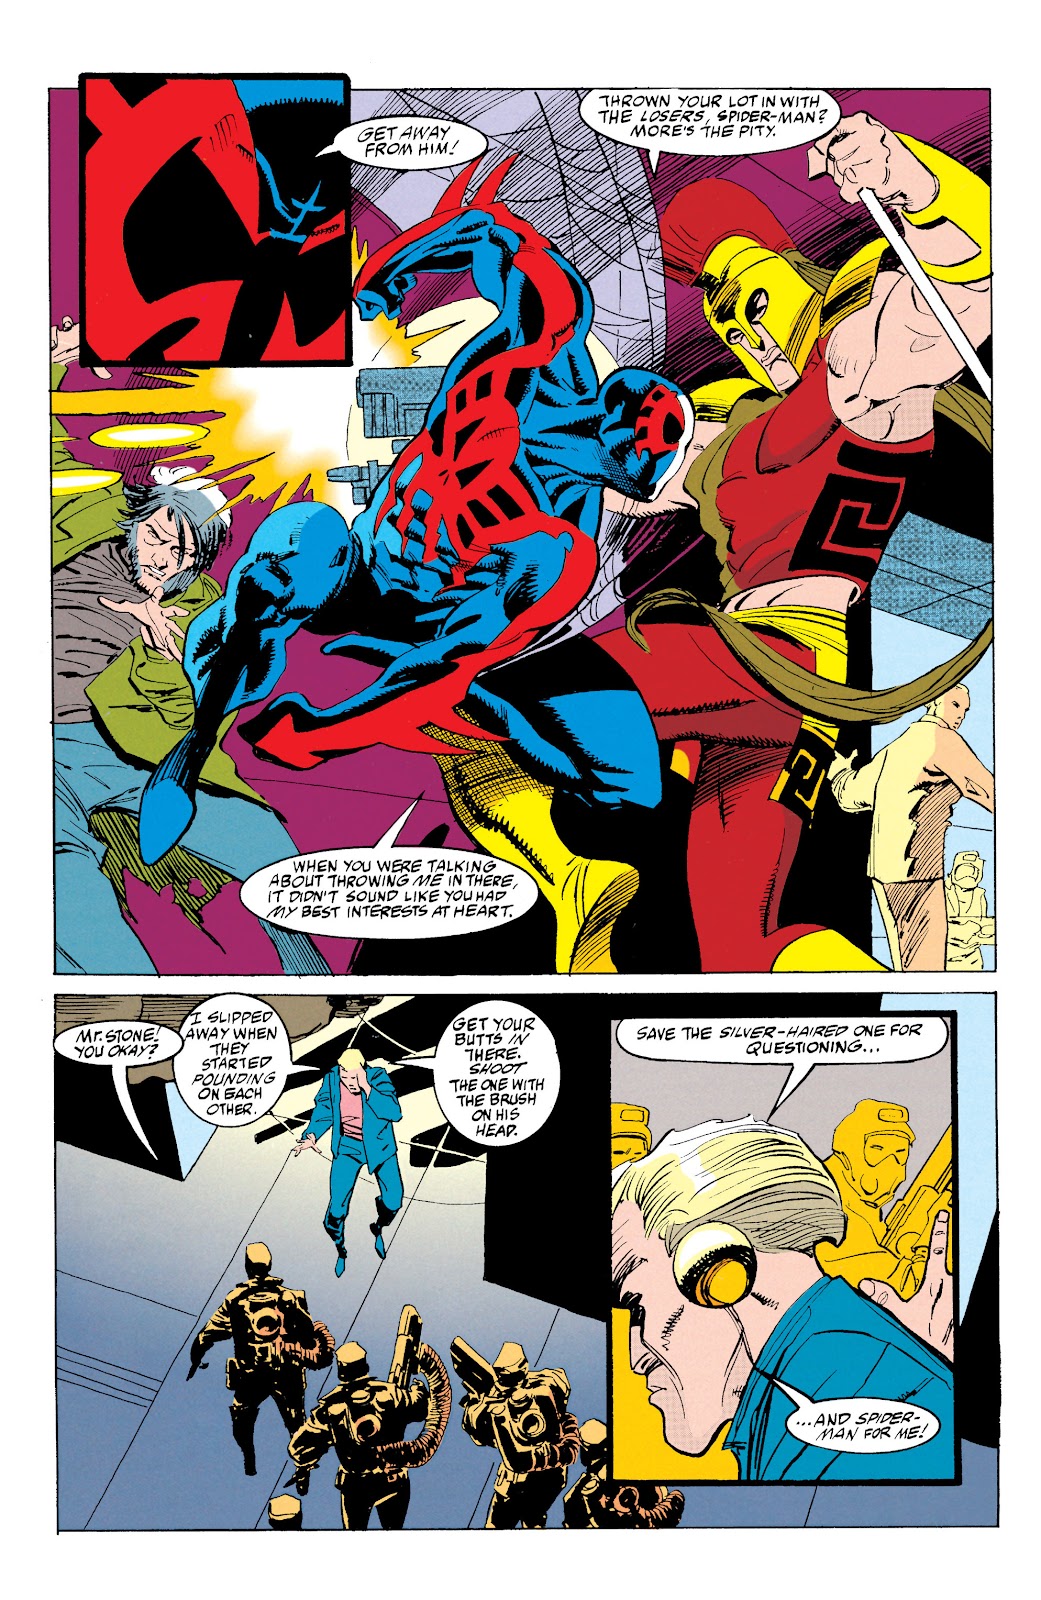 Spider-Man 2099 (1992) issue 13 - Page 6